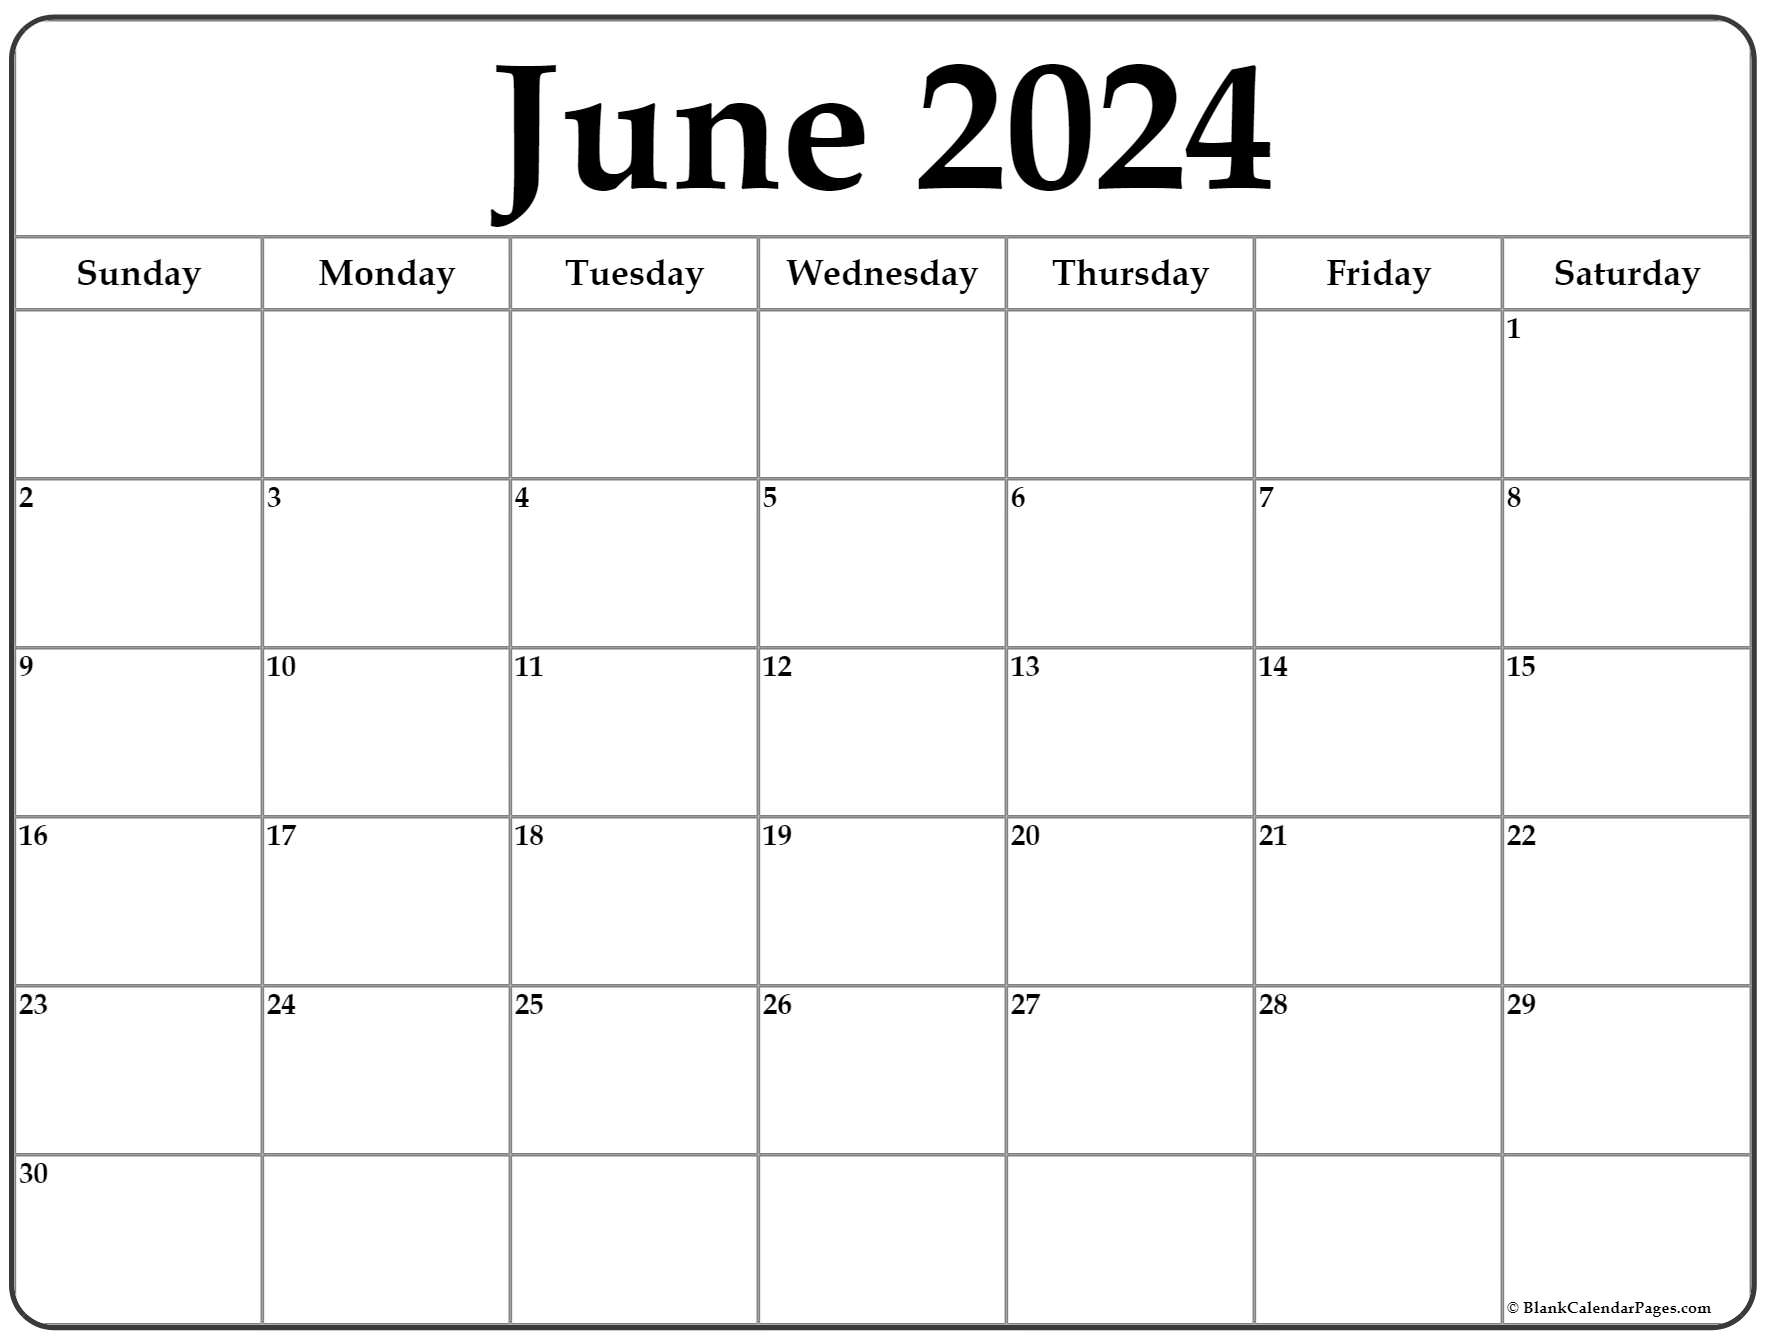 Month Of June 2022 Calendar June 2022 Calendar | Free Printable Calendar Templates